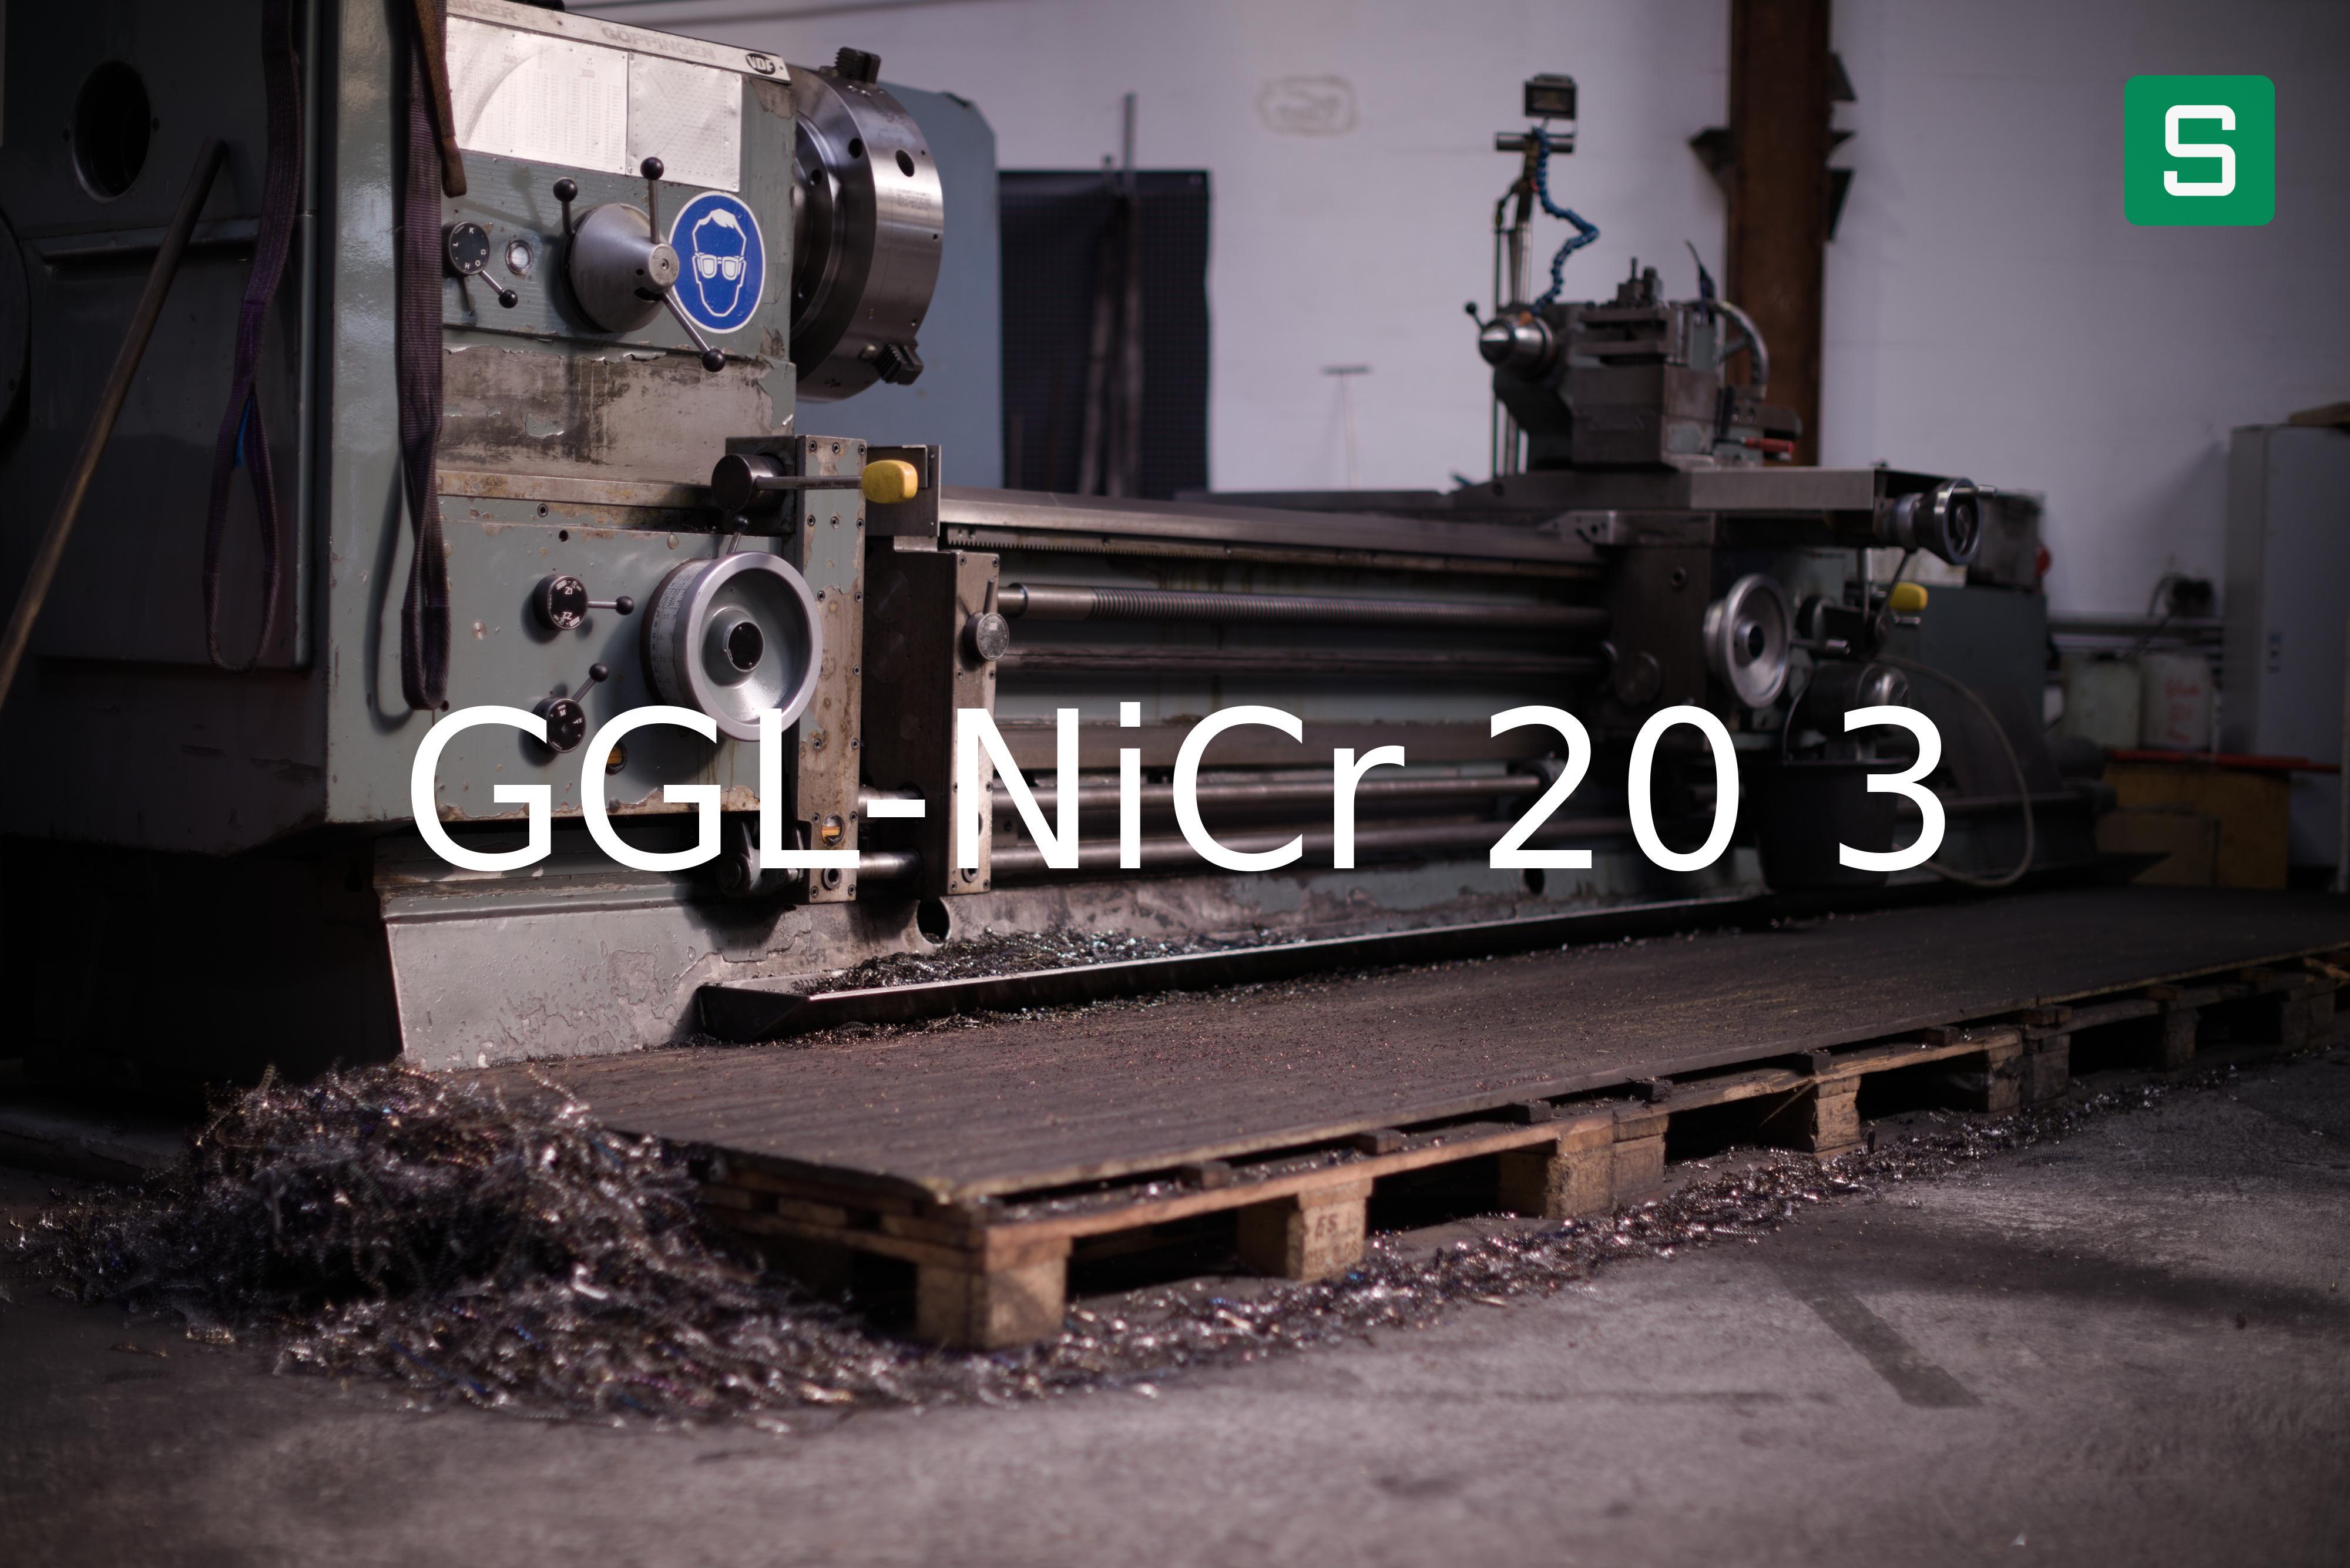 Steel Material: GGL-NiCr 20 3